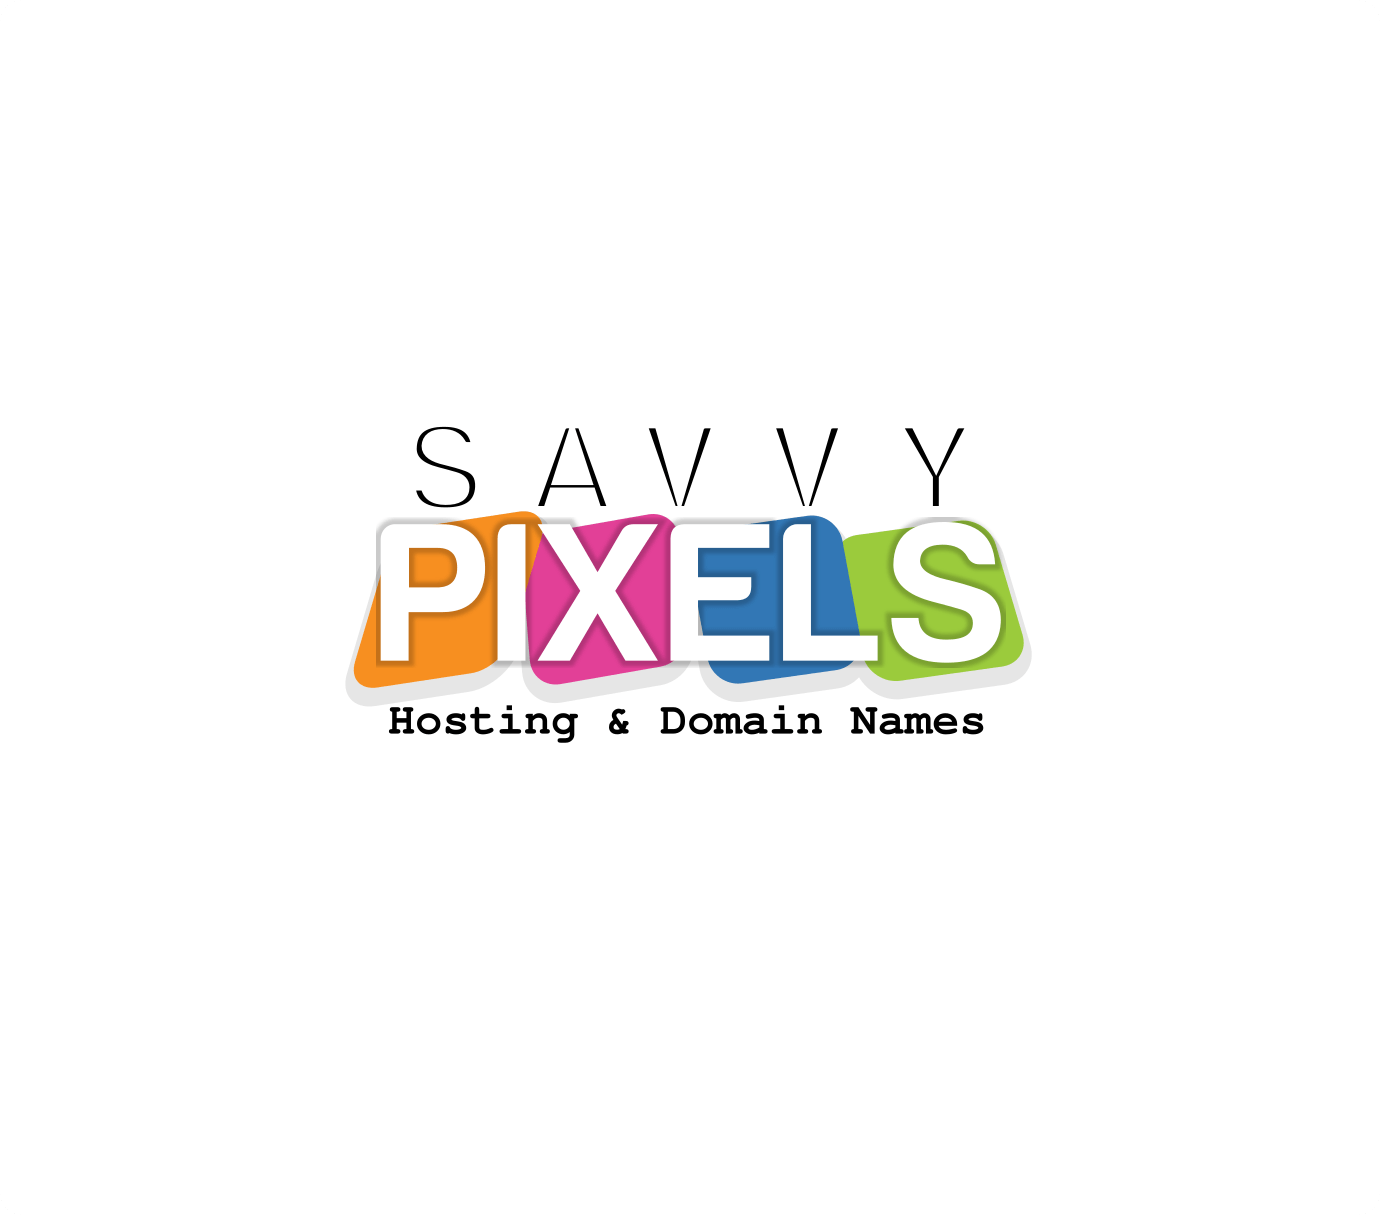 Savvy Logo - Modern, Playful, Information Technology Logo Design for Savvy Pixels